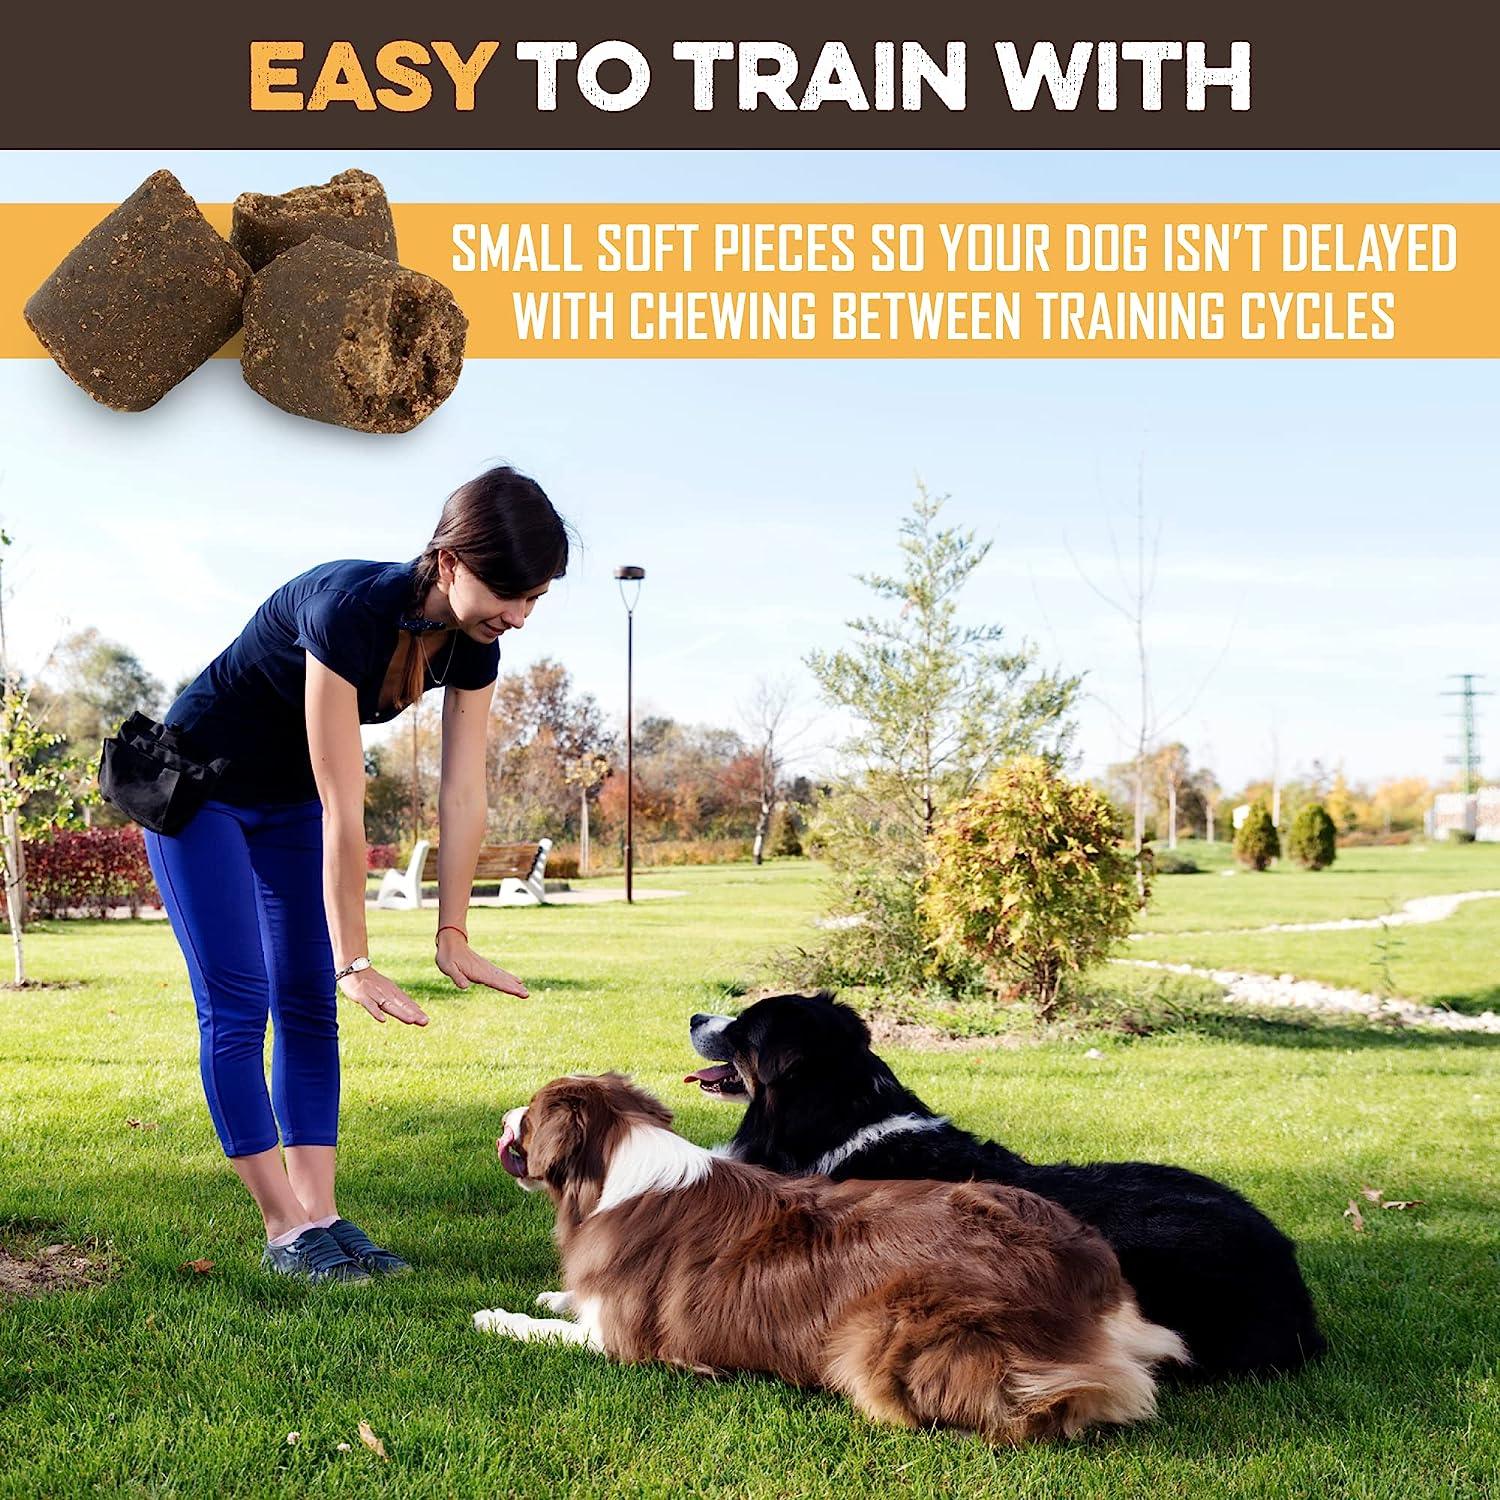 Training Treats for Dogs - Peanut Butter & Honey - Brutus & Barnaby